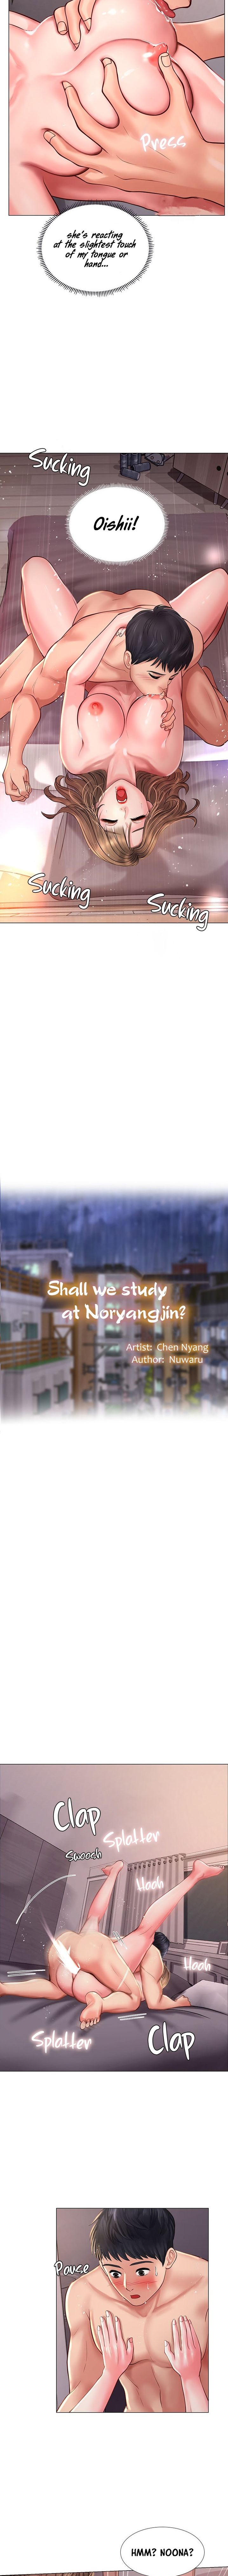 Should I Study at Noryangjin? - Chapter 13 Page 5